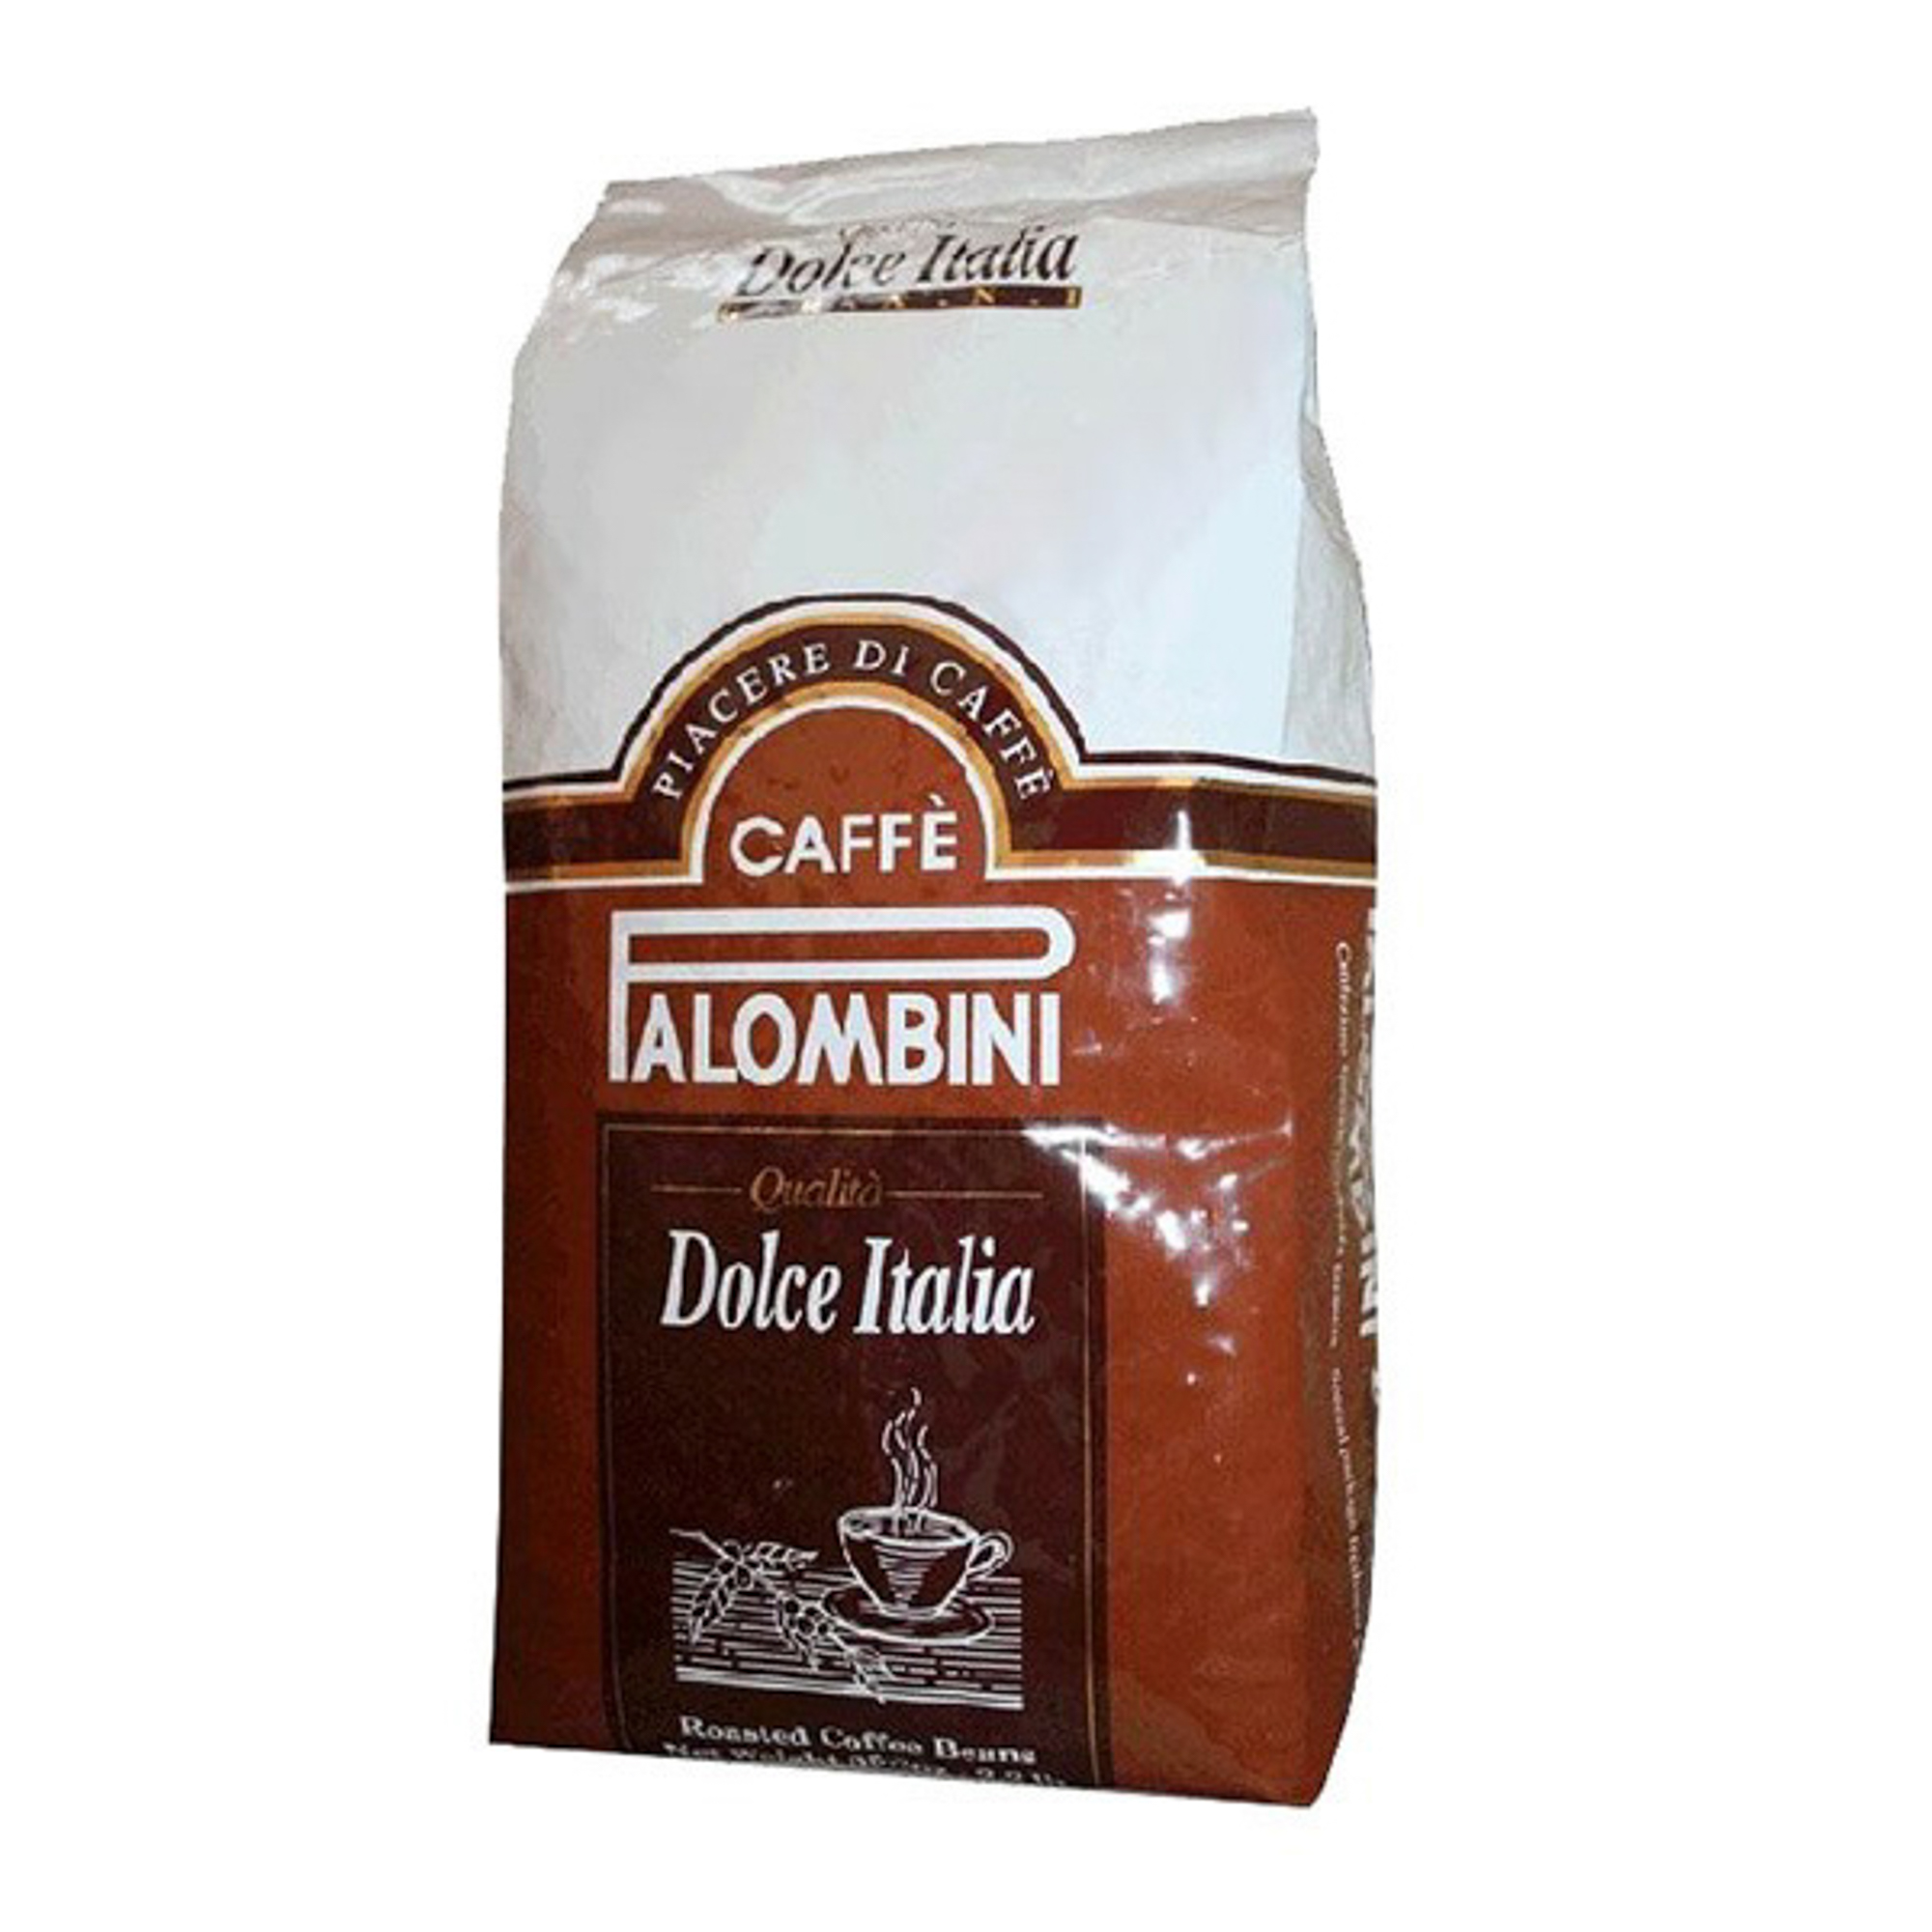 Кофе в зернах Palombini Dolce Italia 1 кг кофе в зернах vergnano extra dolce 1000 г